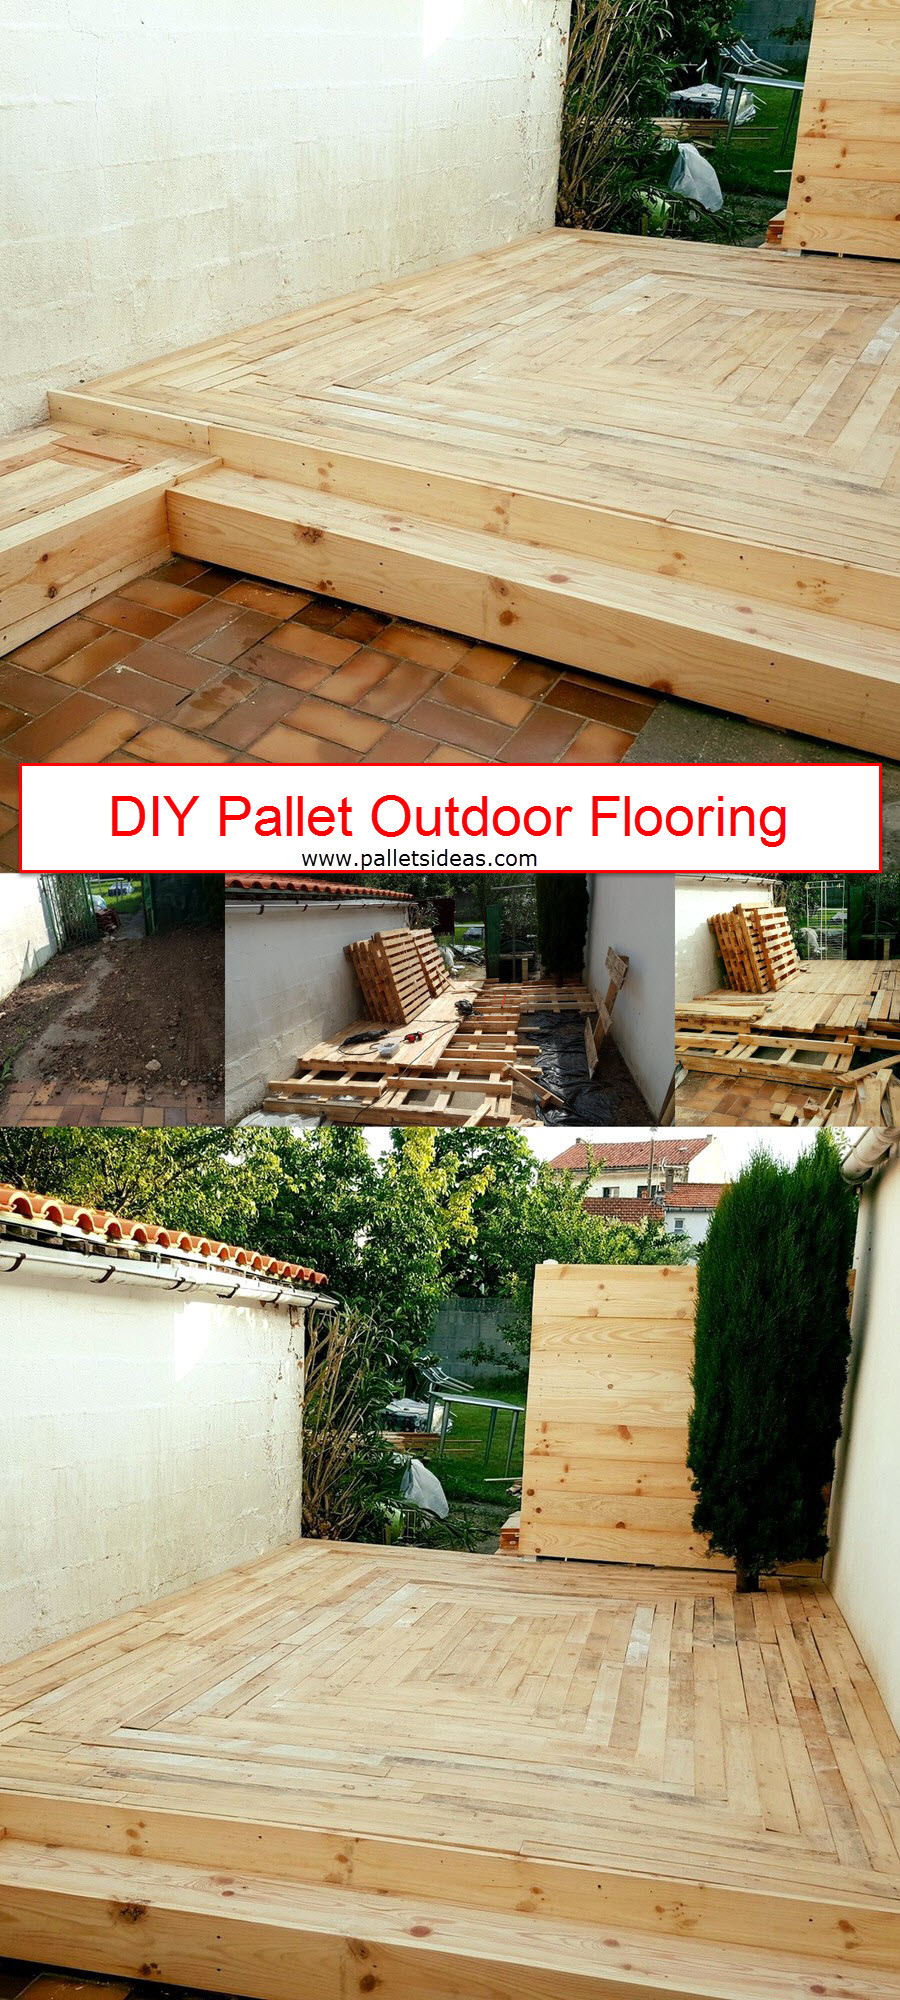 DIY Outdoor Flooring
 DIY Pallet Outdoor Flooring